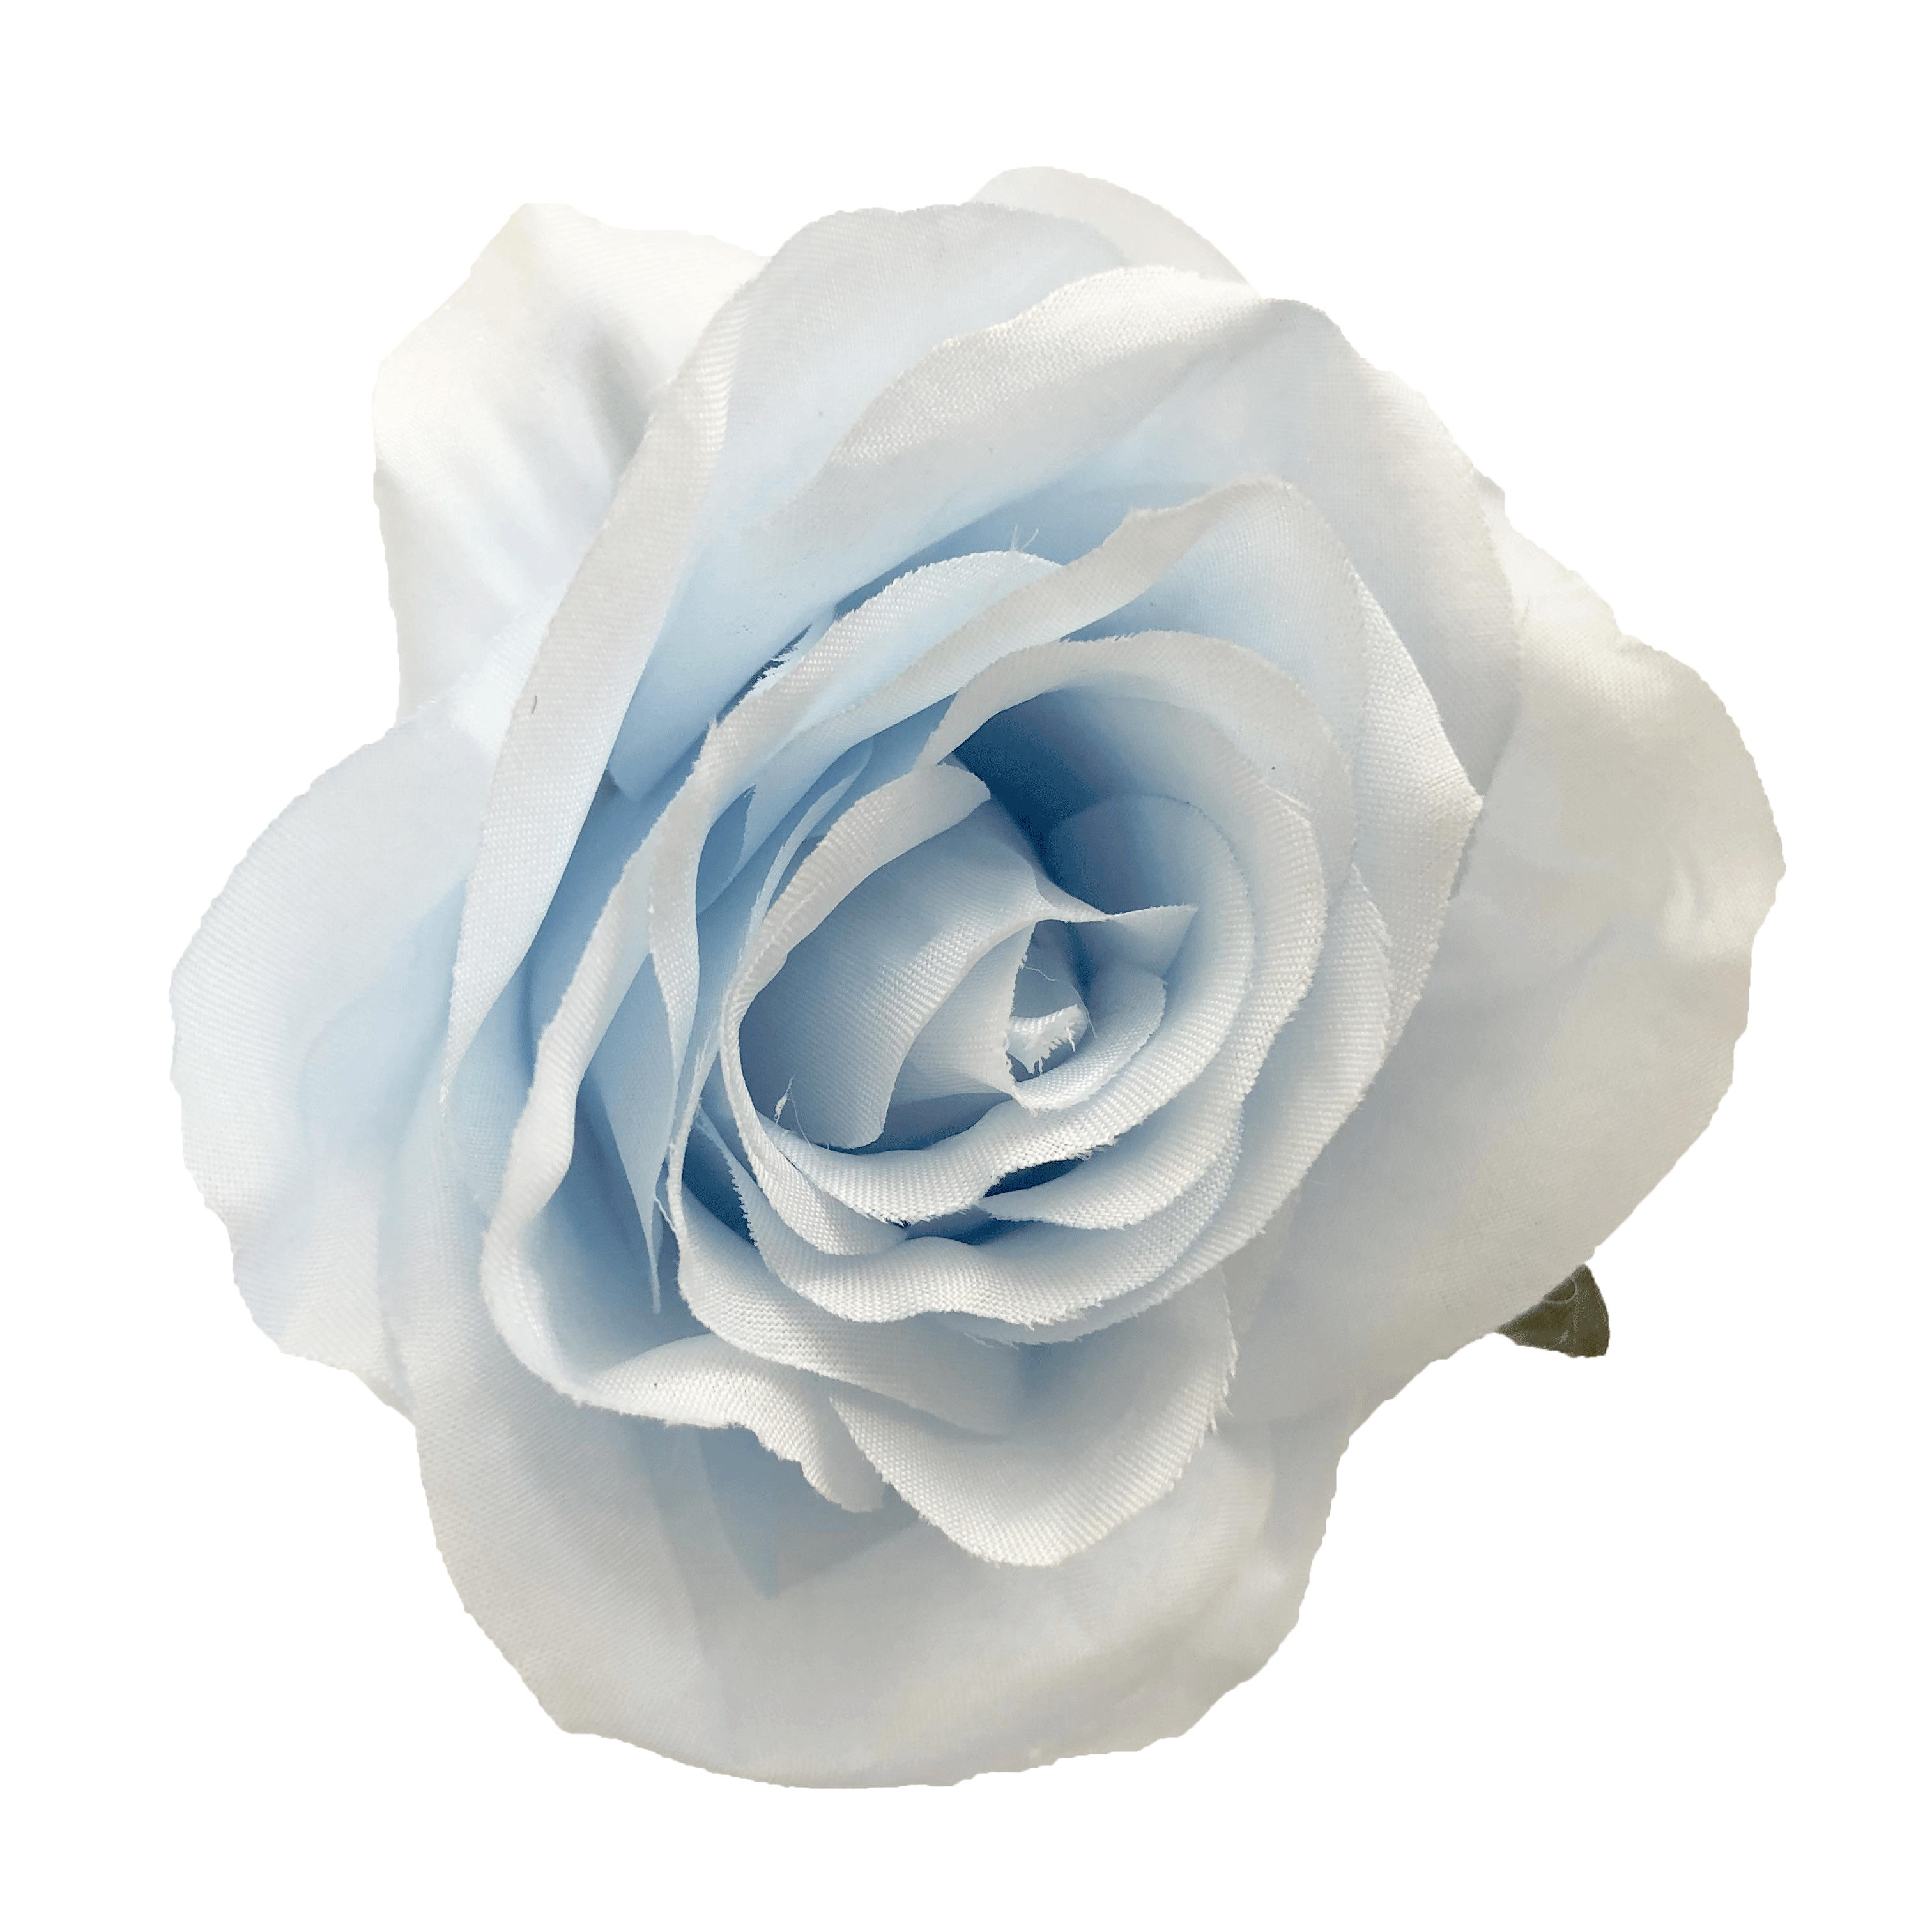 Artificial Silk Flower Head - Light Blue Rose Style 16 - 1pc